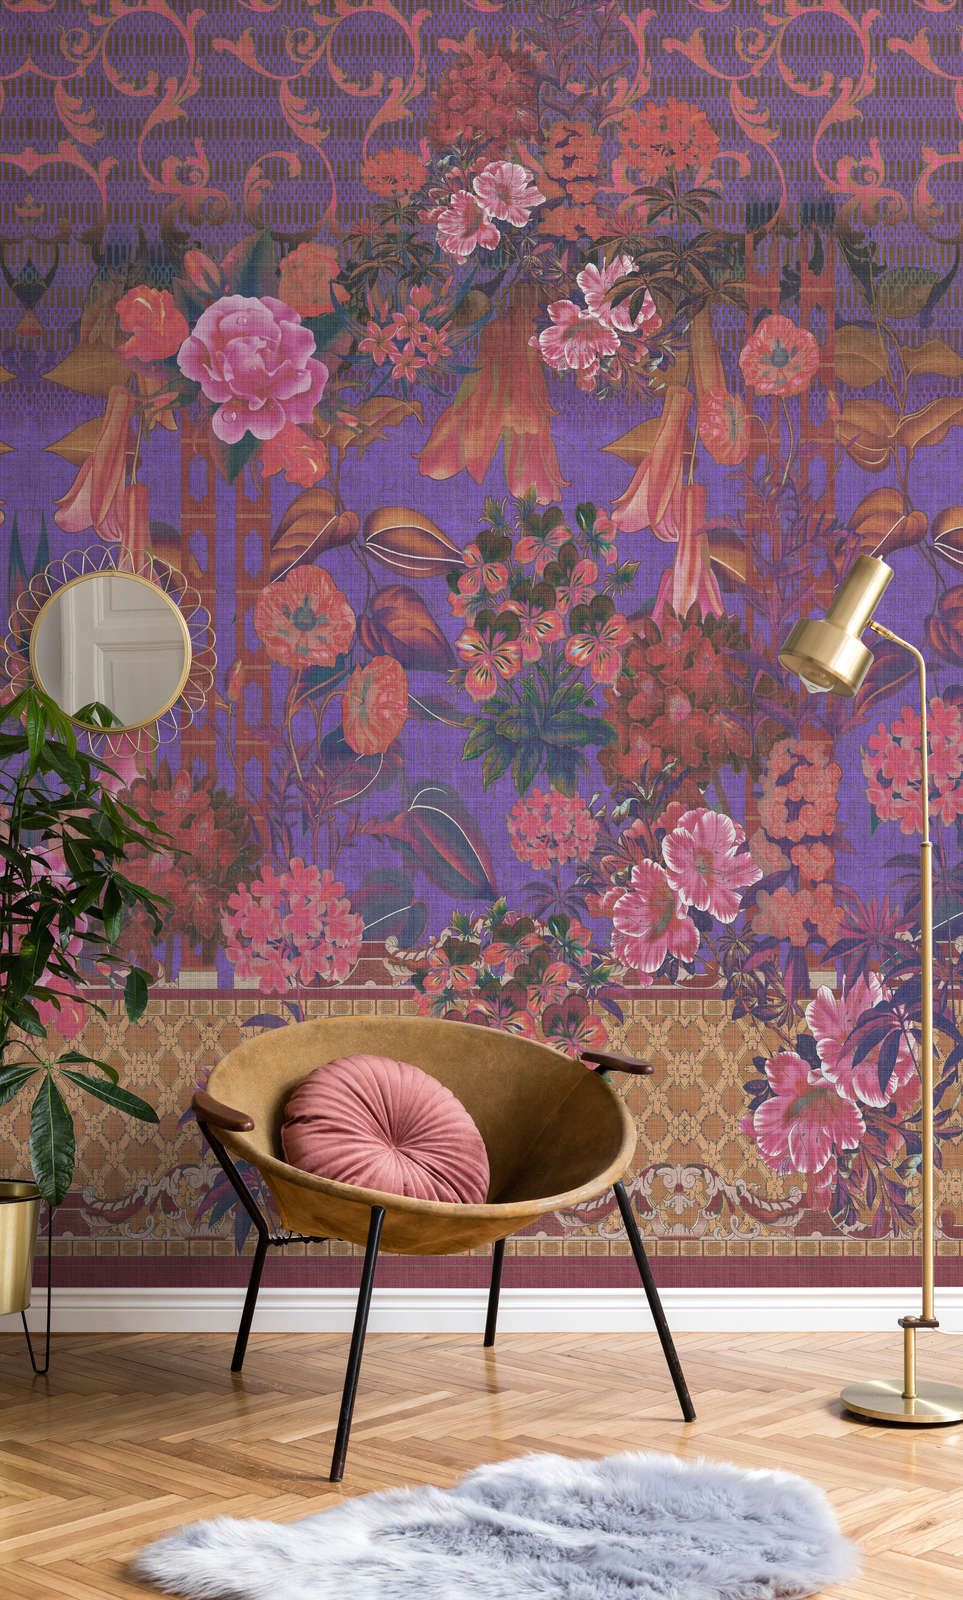             Photo wallpaper »sati 1« - Floral design with linen structure look - Purple | matt, smooth non-woven fabric
        